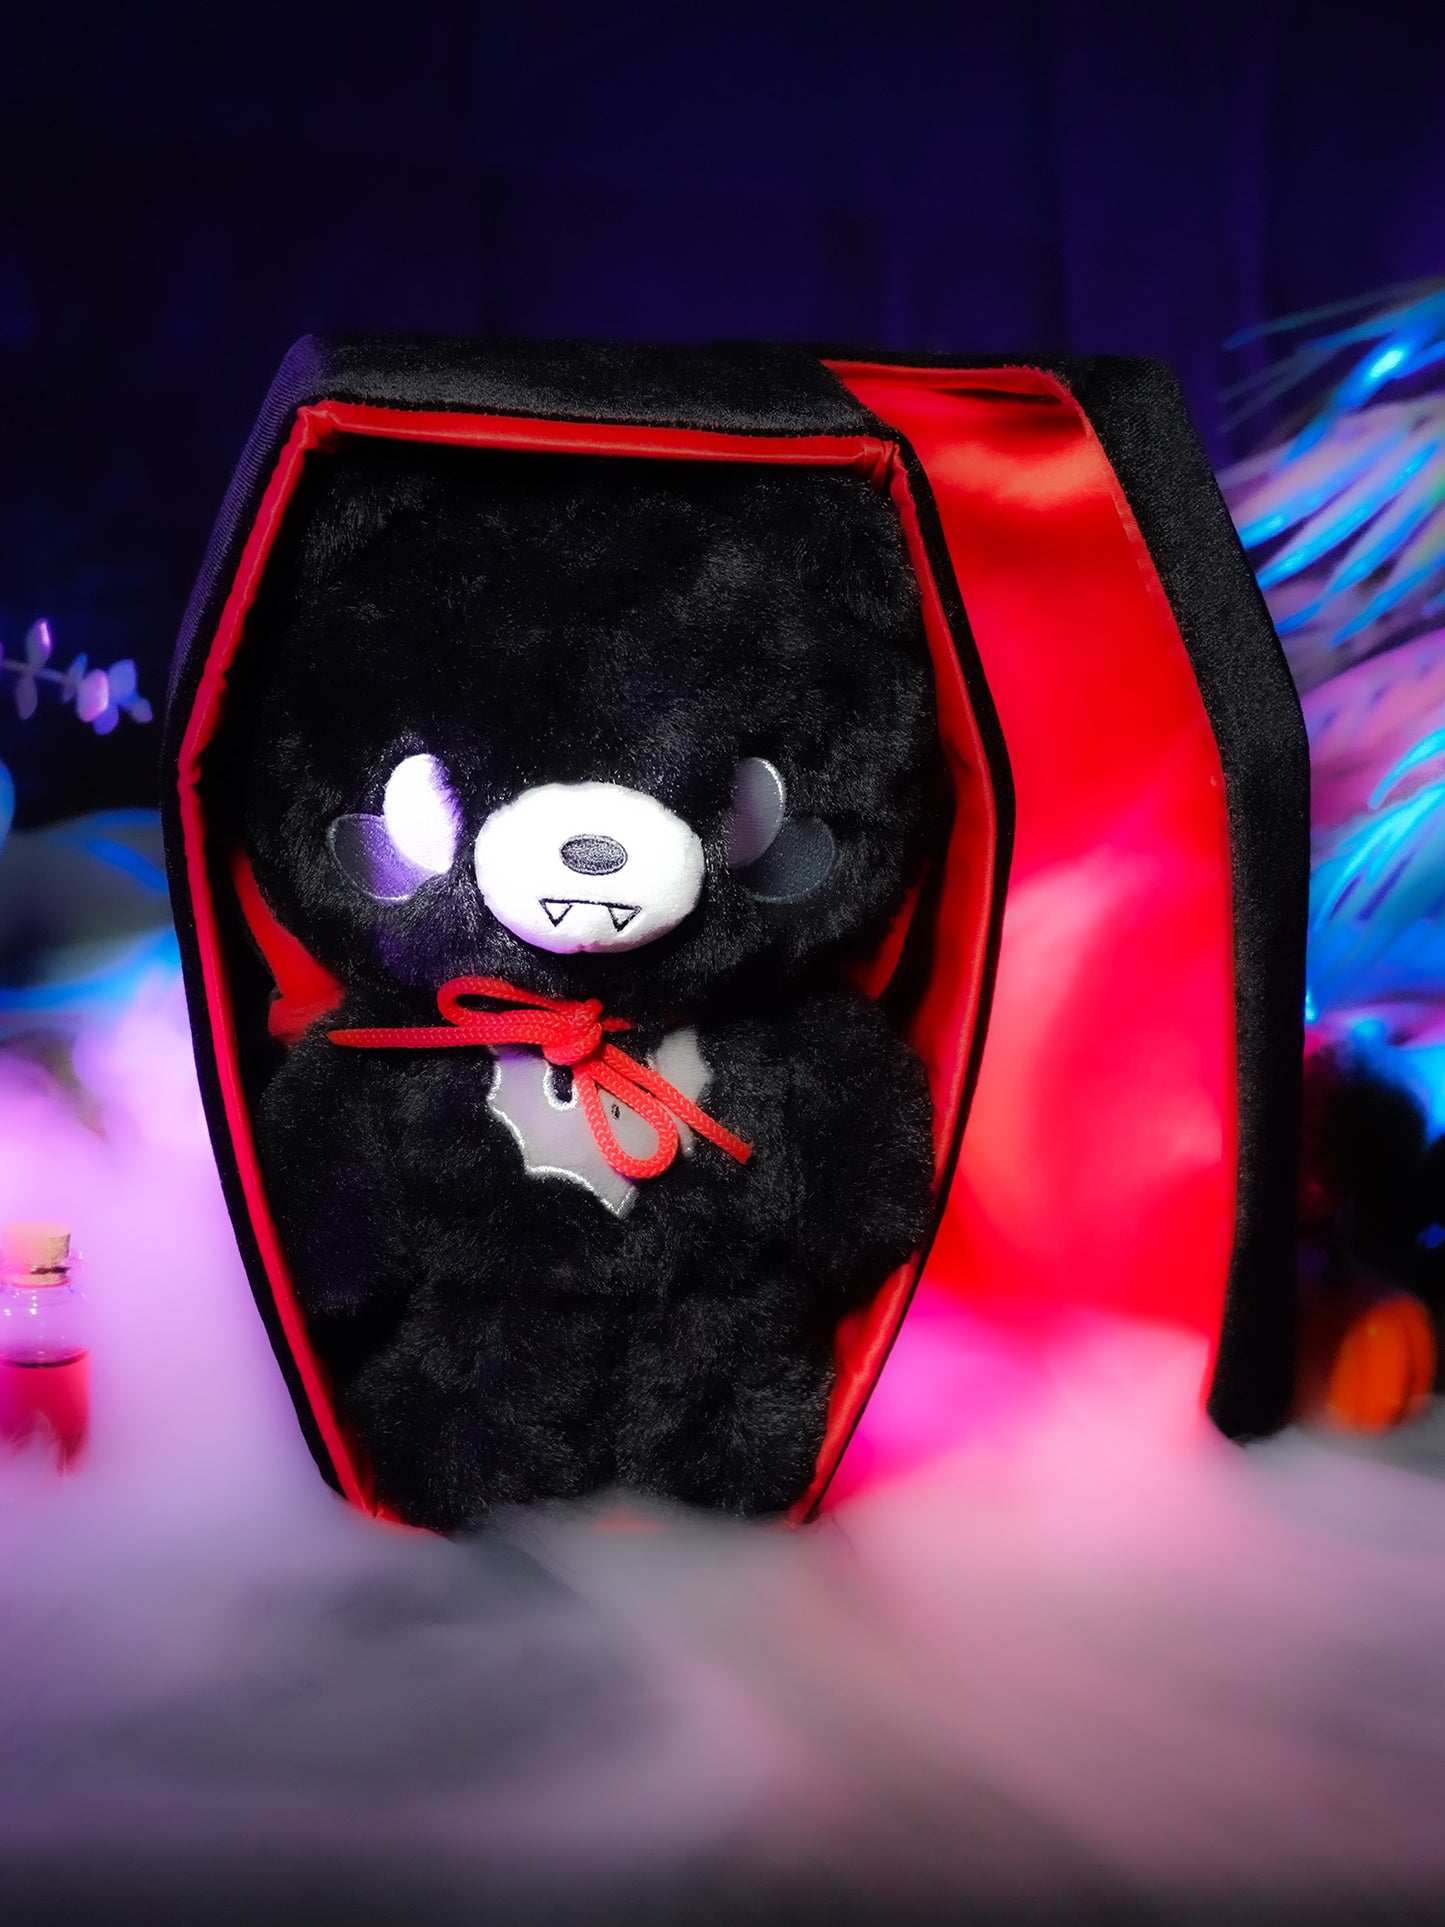 Brim the Vampire Bear Plush - Special Edition